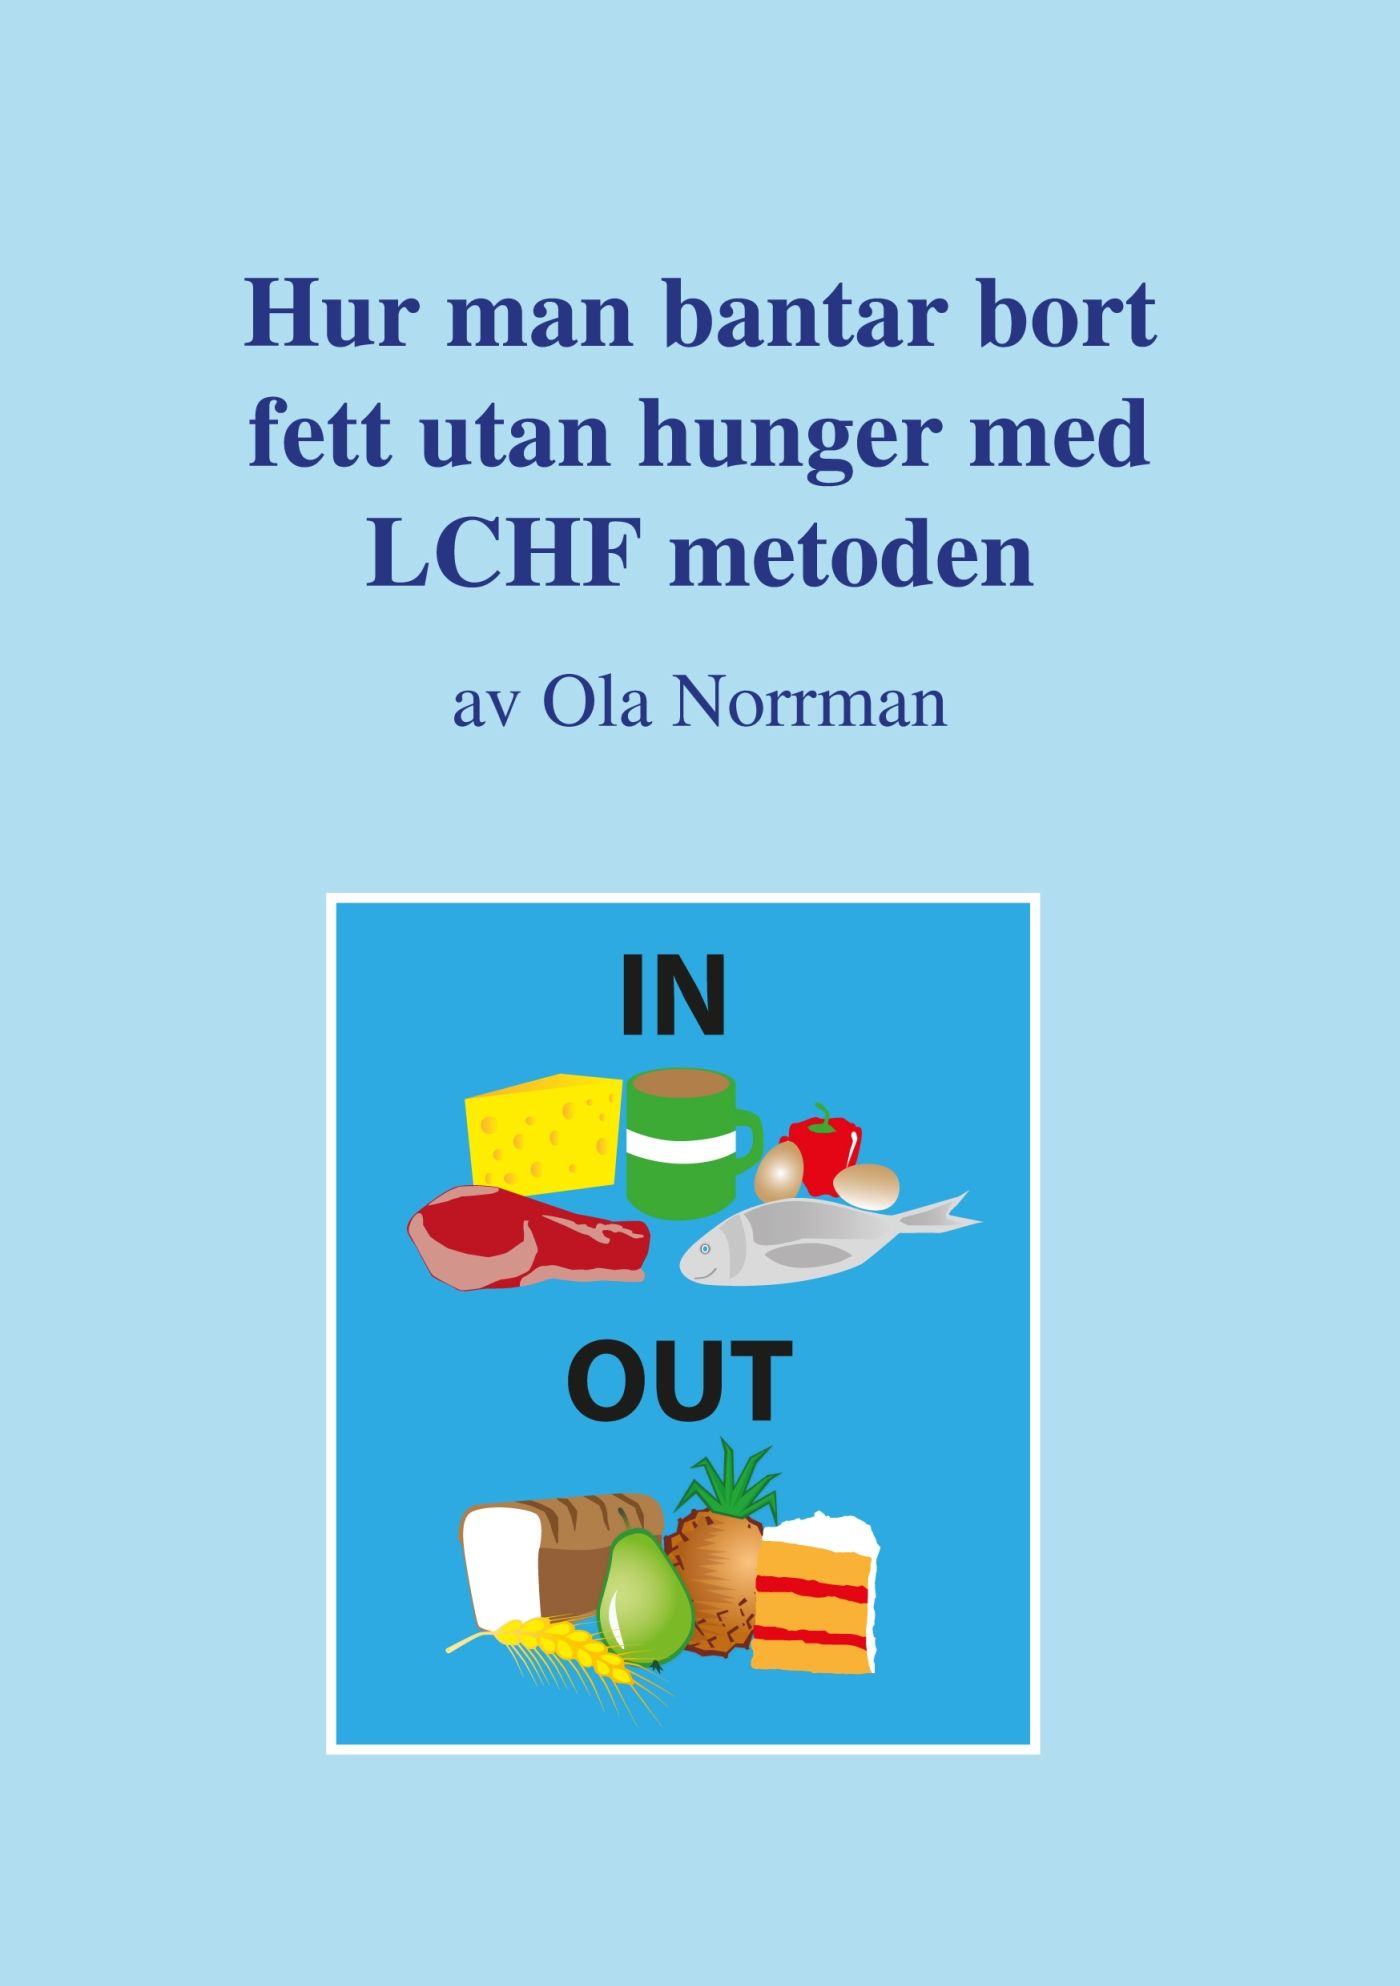 Hur man bantar bort fett utan hunger med LCHF metoden, e-bok av Ola Norrman